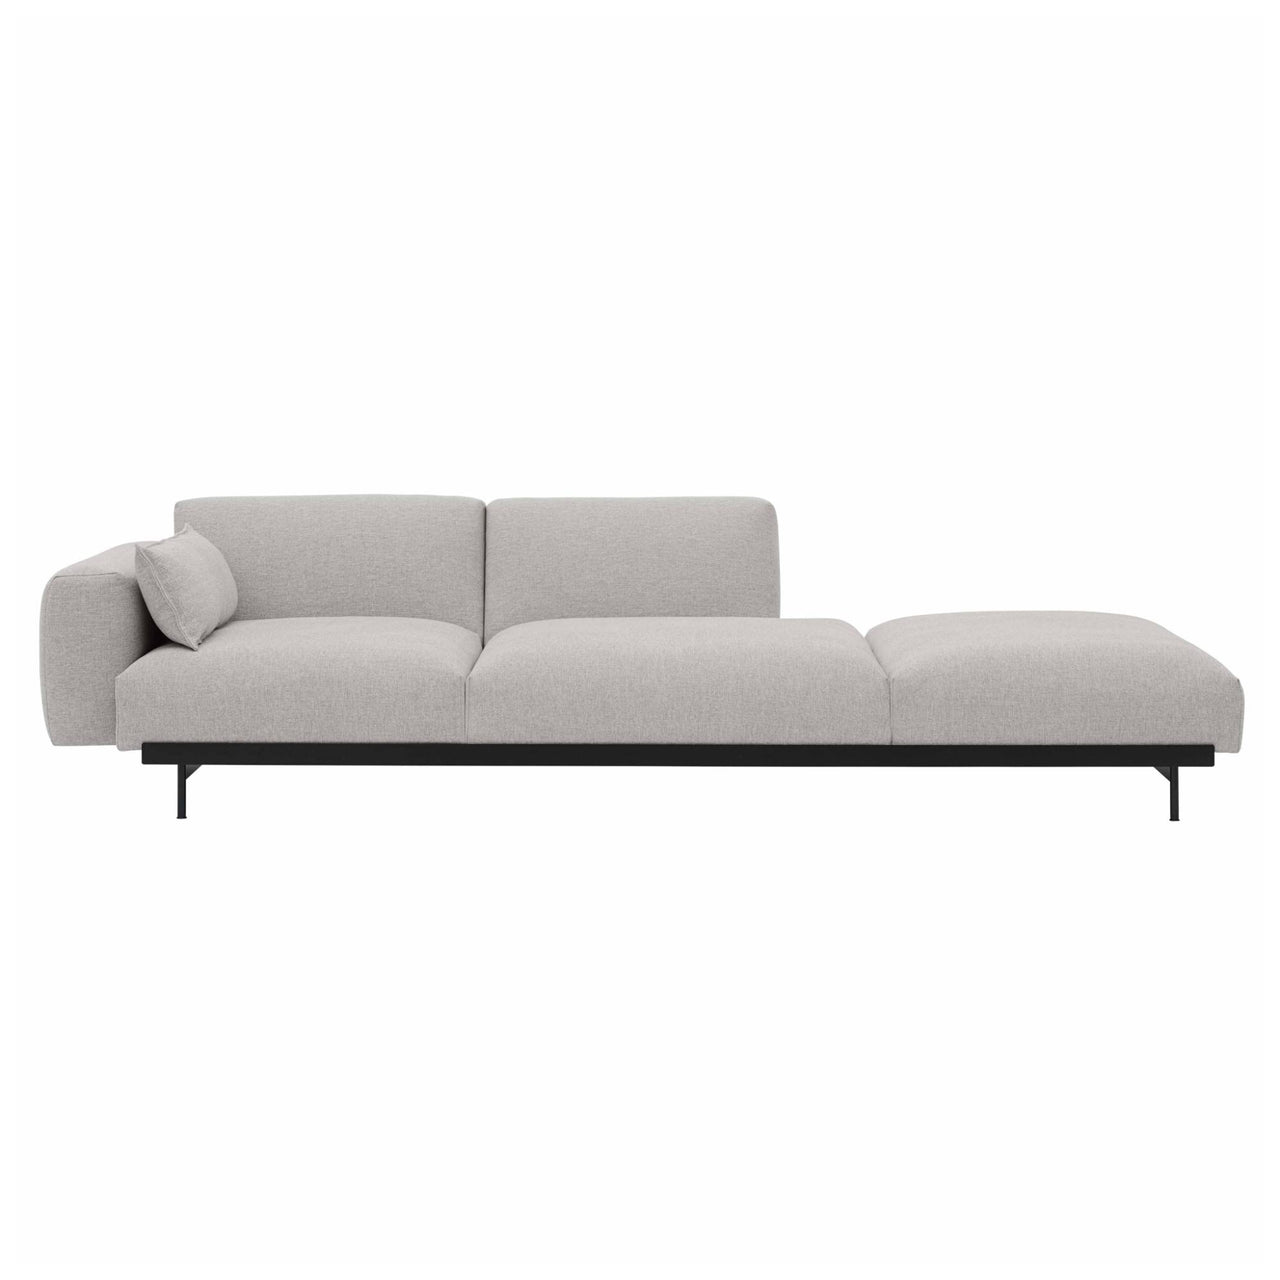 In Situ Modular Sofa: 3 Seater + Configuration 5